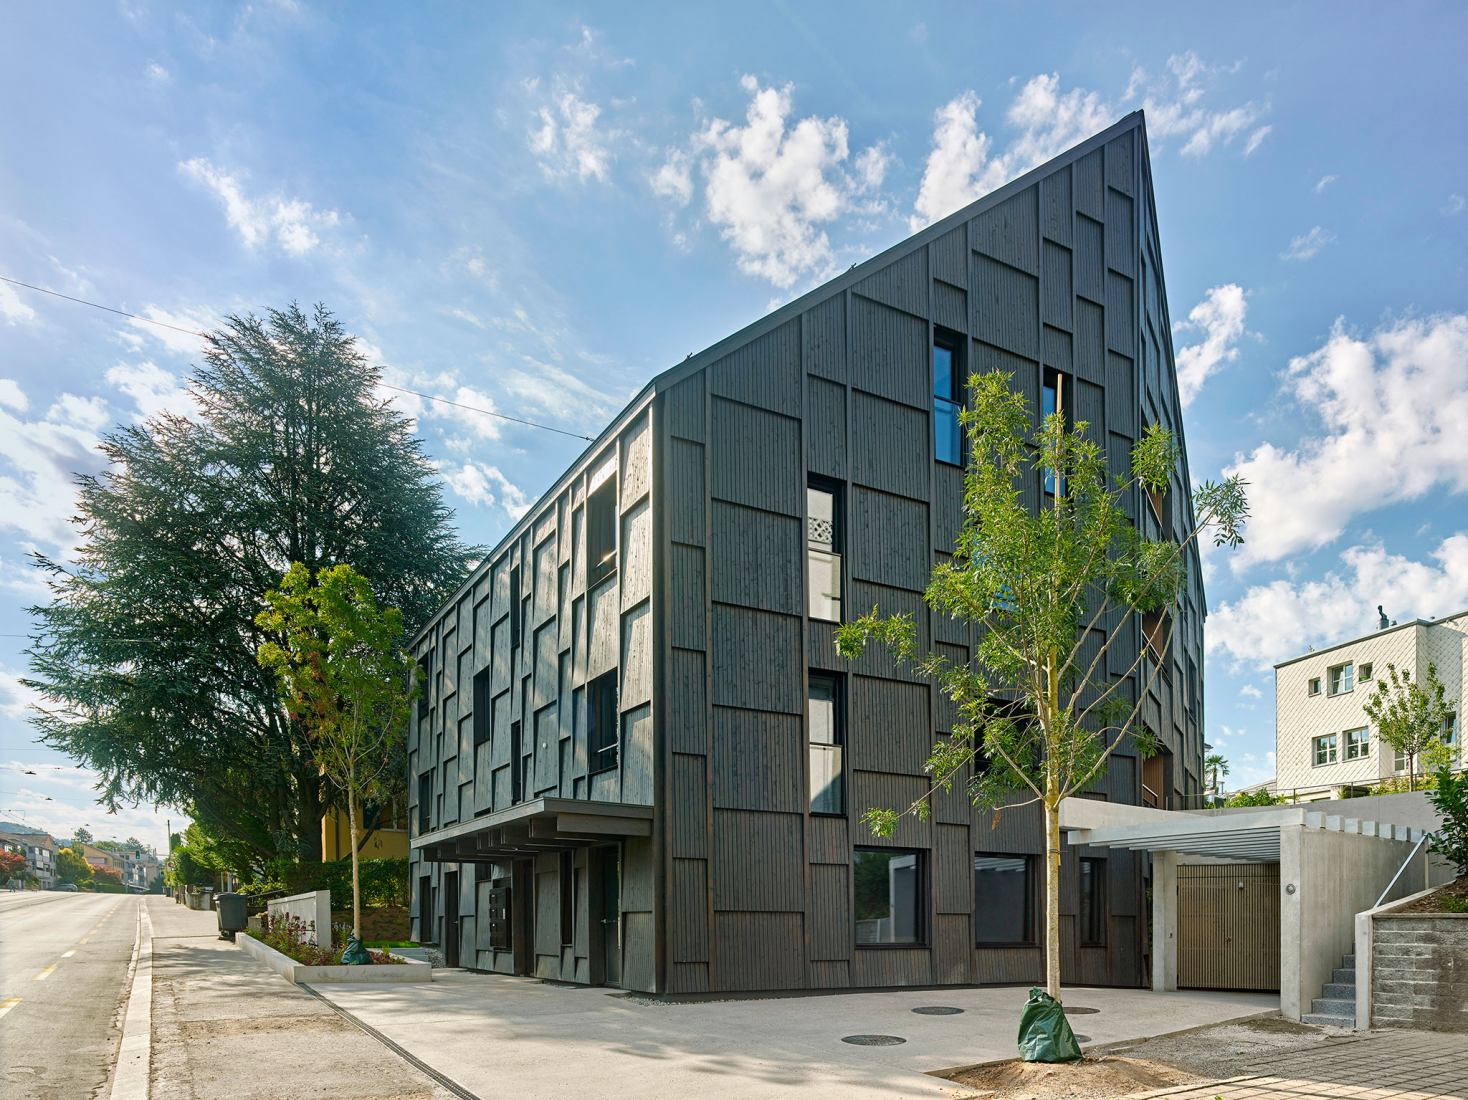 Edificio L329 por Rossetti+Wyss Architekten. Fotografía por Jürg Zimmermann.